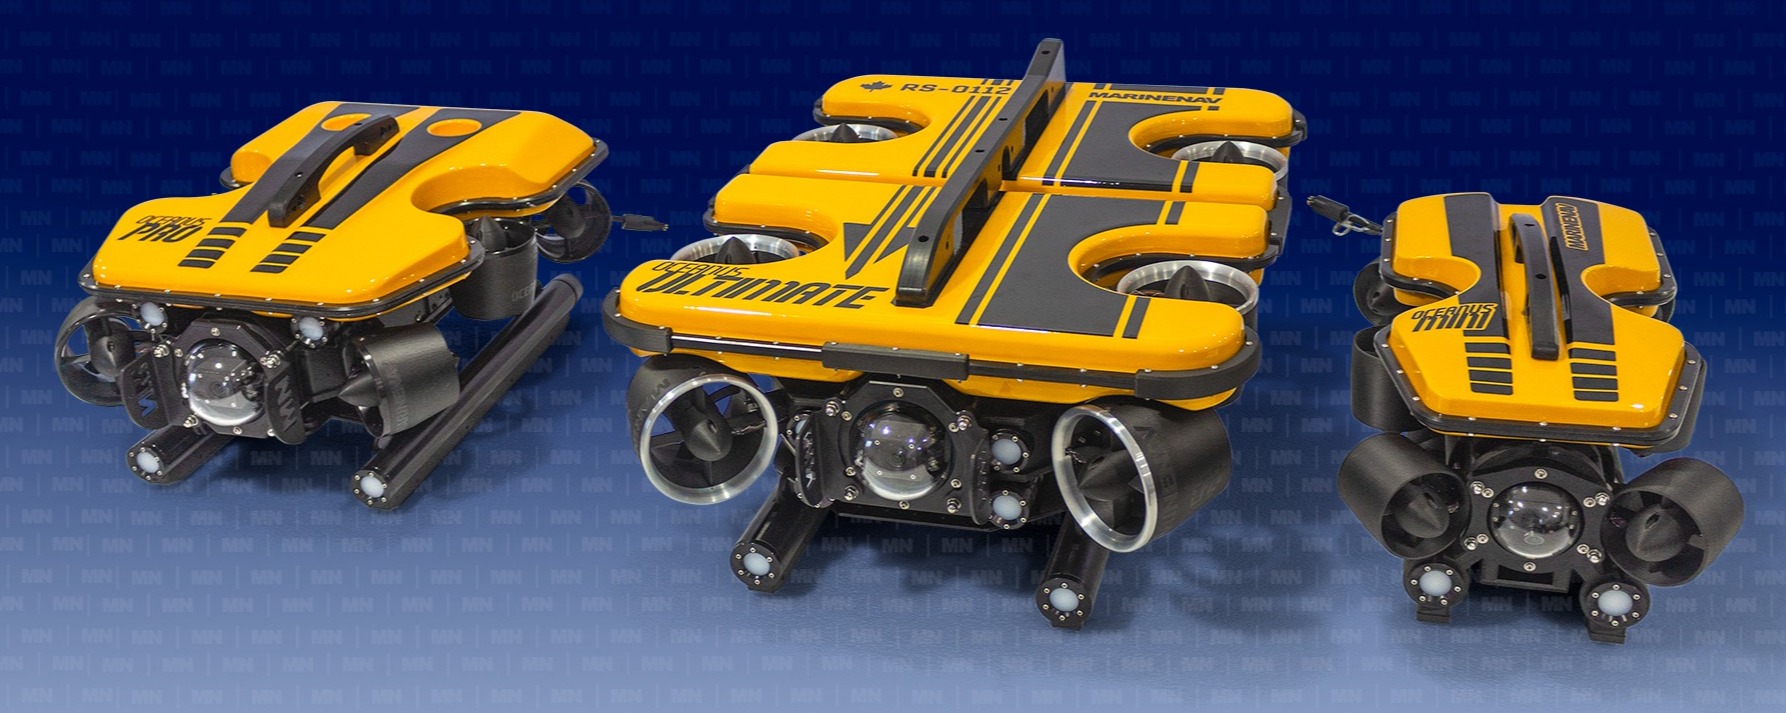 MarineNav ROV submersibles. From left: The Oceanus Pro, The Oceanus Ultimate and the Oceanus Mini